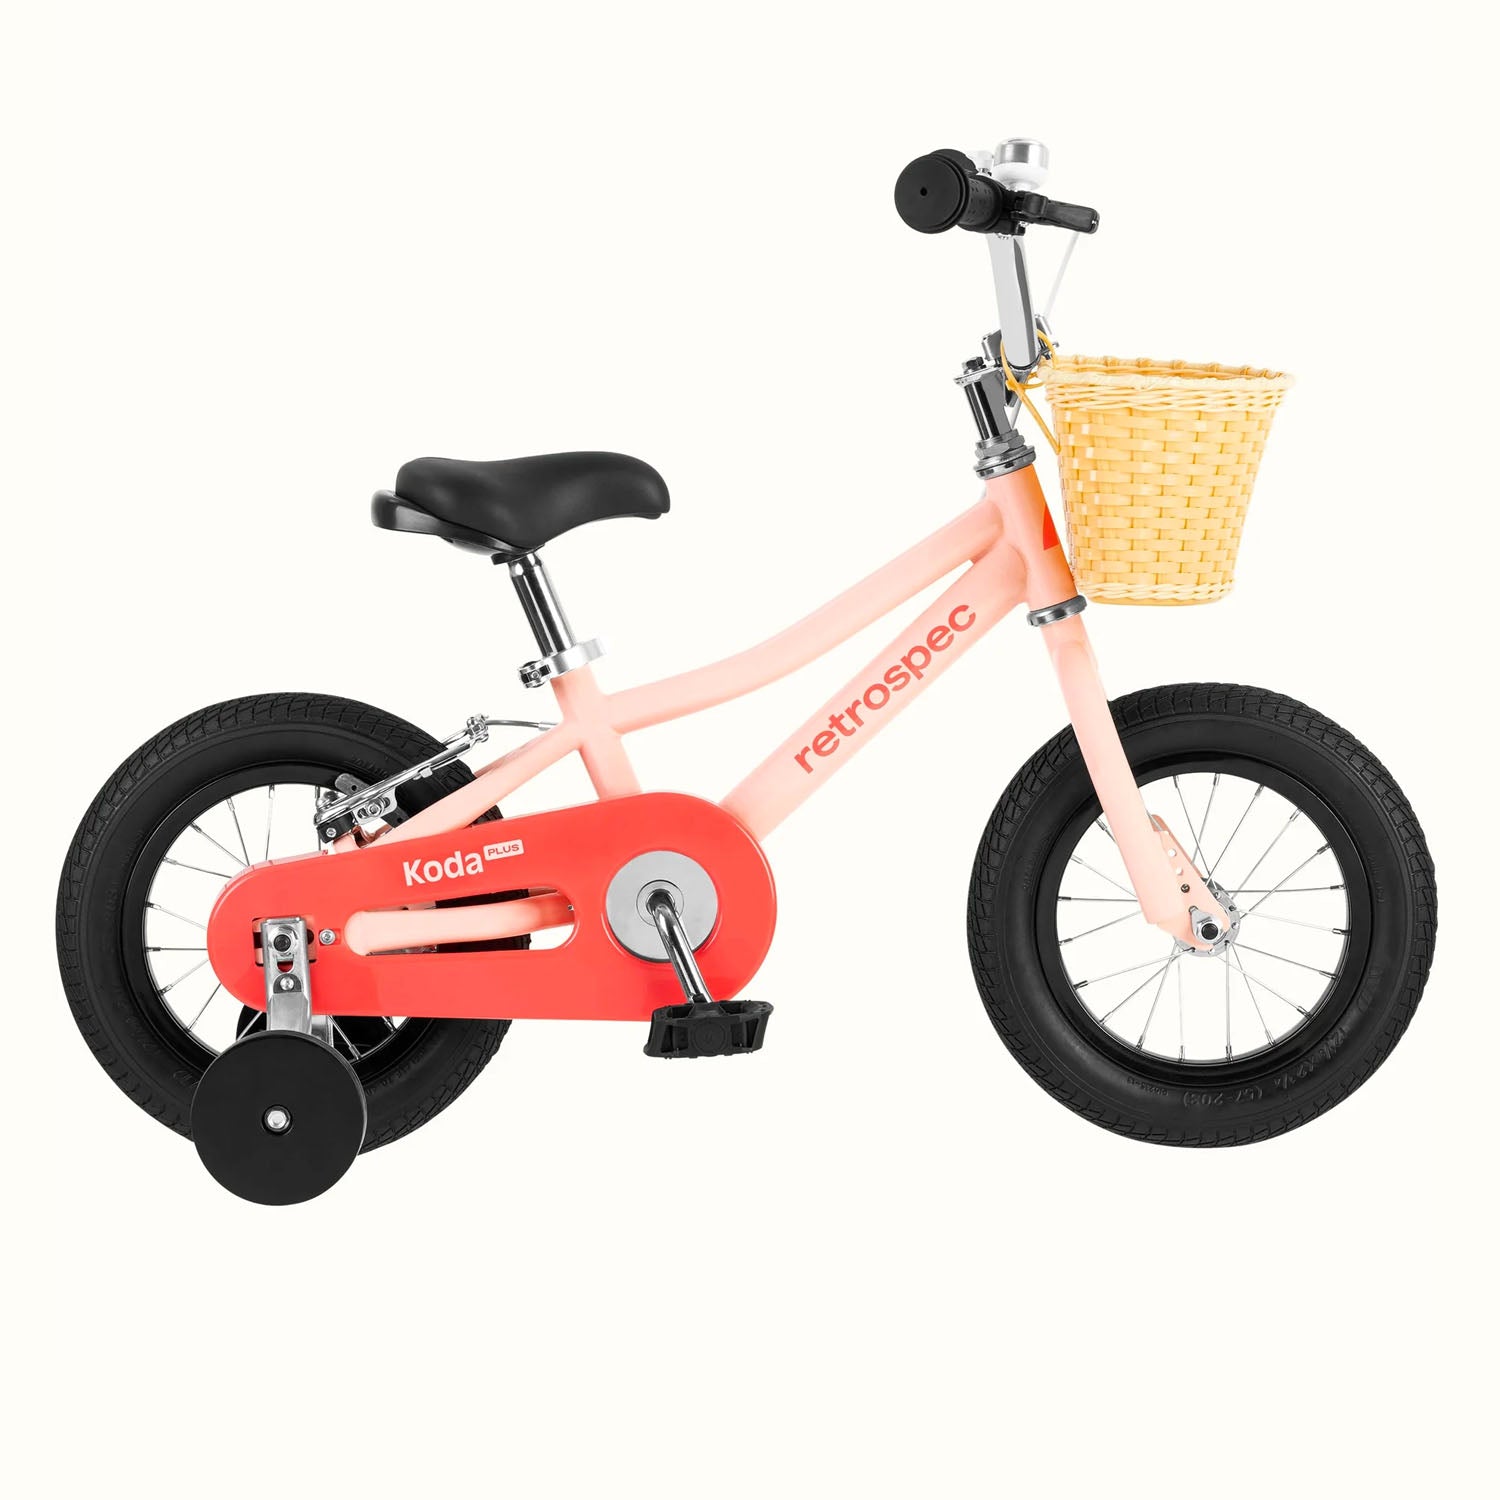 Retrospec Koda 12" Kids Bike > 12" > Blush Pink 5473, Bixby Bicycles, bixbybicycles.com